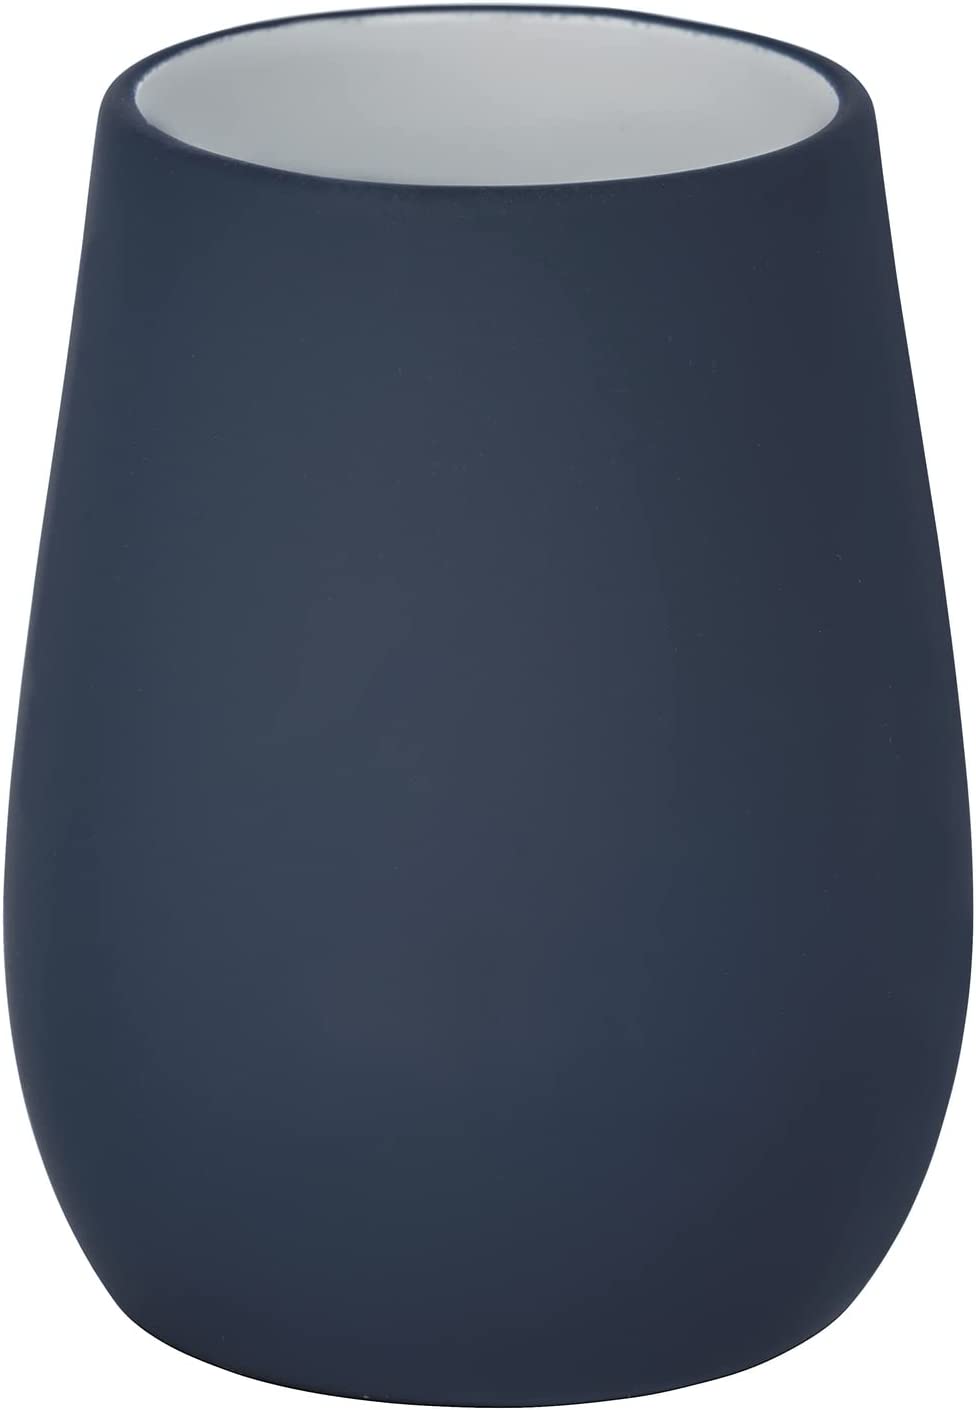 Zahnputzbecher Sydney Blau Matt, Keramik mit Soft-Touch Beschichtung - Zahnbürstenhalter für Zahnbürste und Zahnpasta mit Soft-Touch Beschichtung, Keramik, 8.5 x 11 x 8.5 cm, Blau Matt